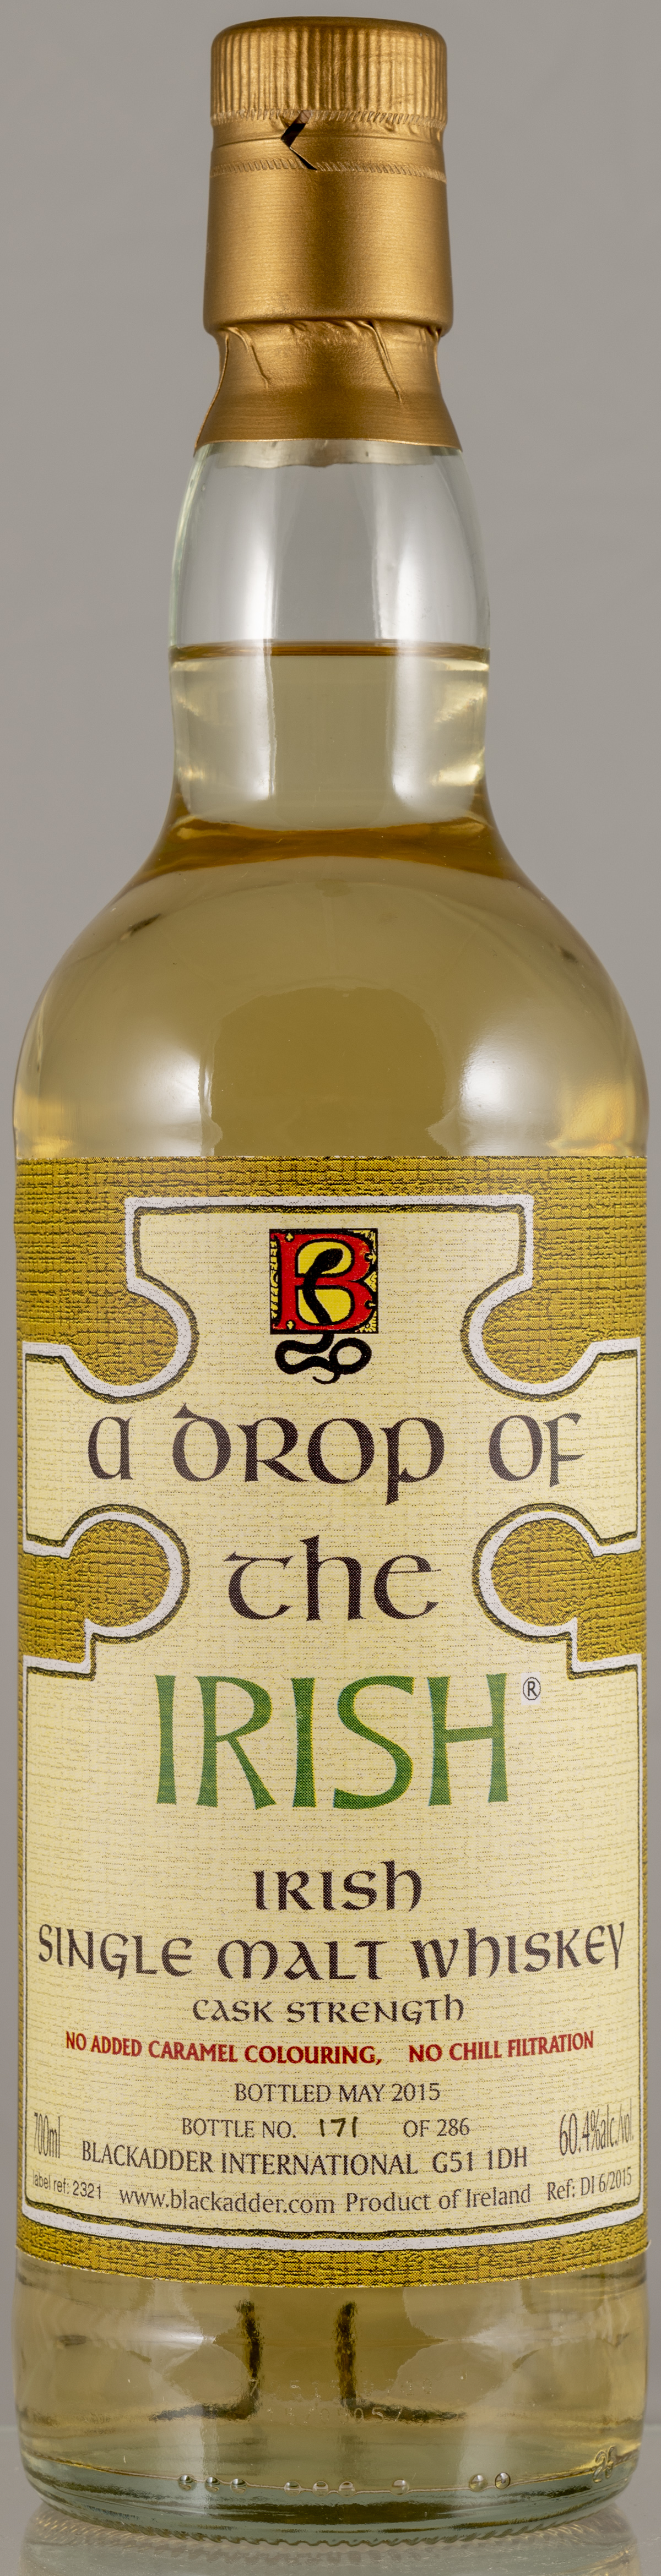 Billede: PHC_6980 - A drop of the irish - bottle front.jpg